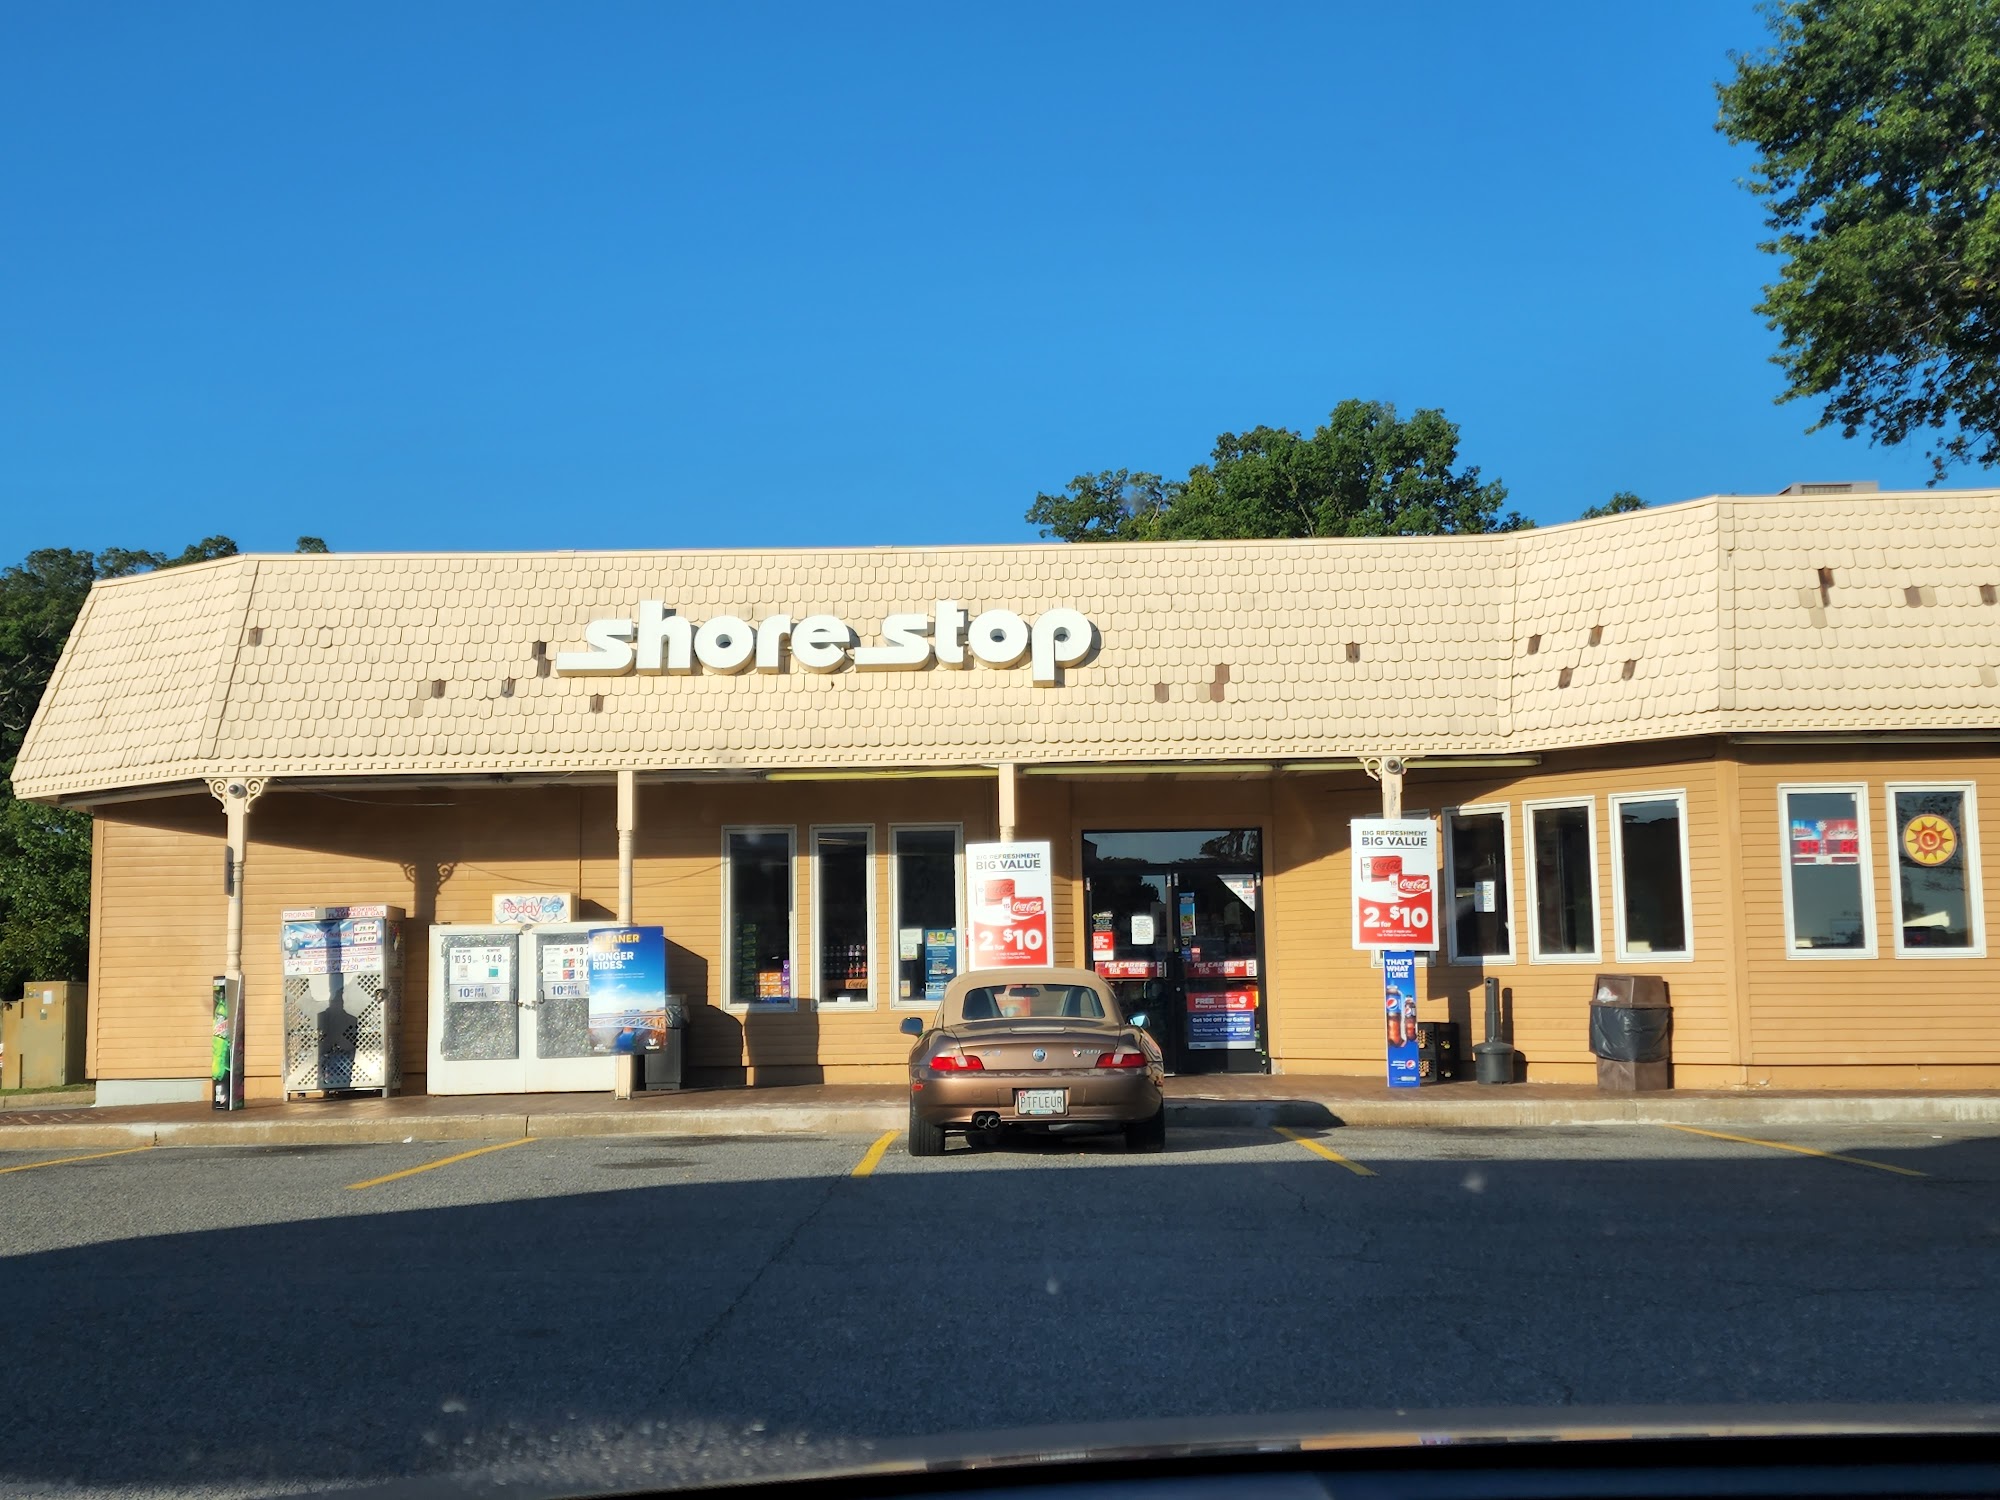 Shore Stop